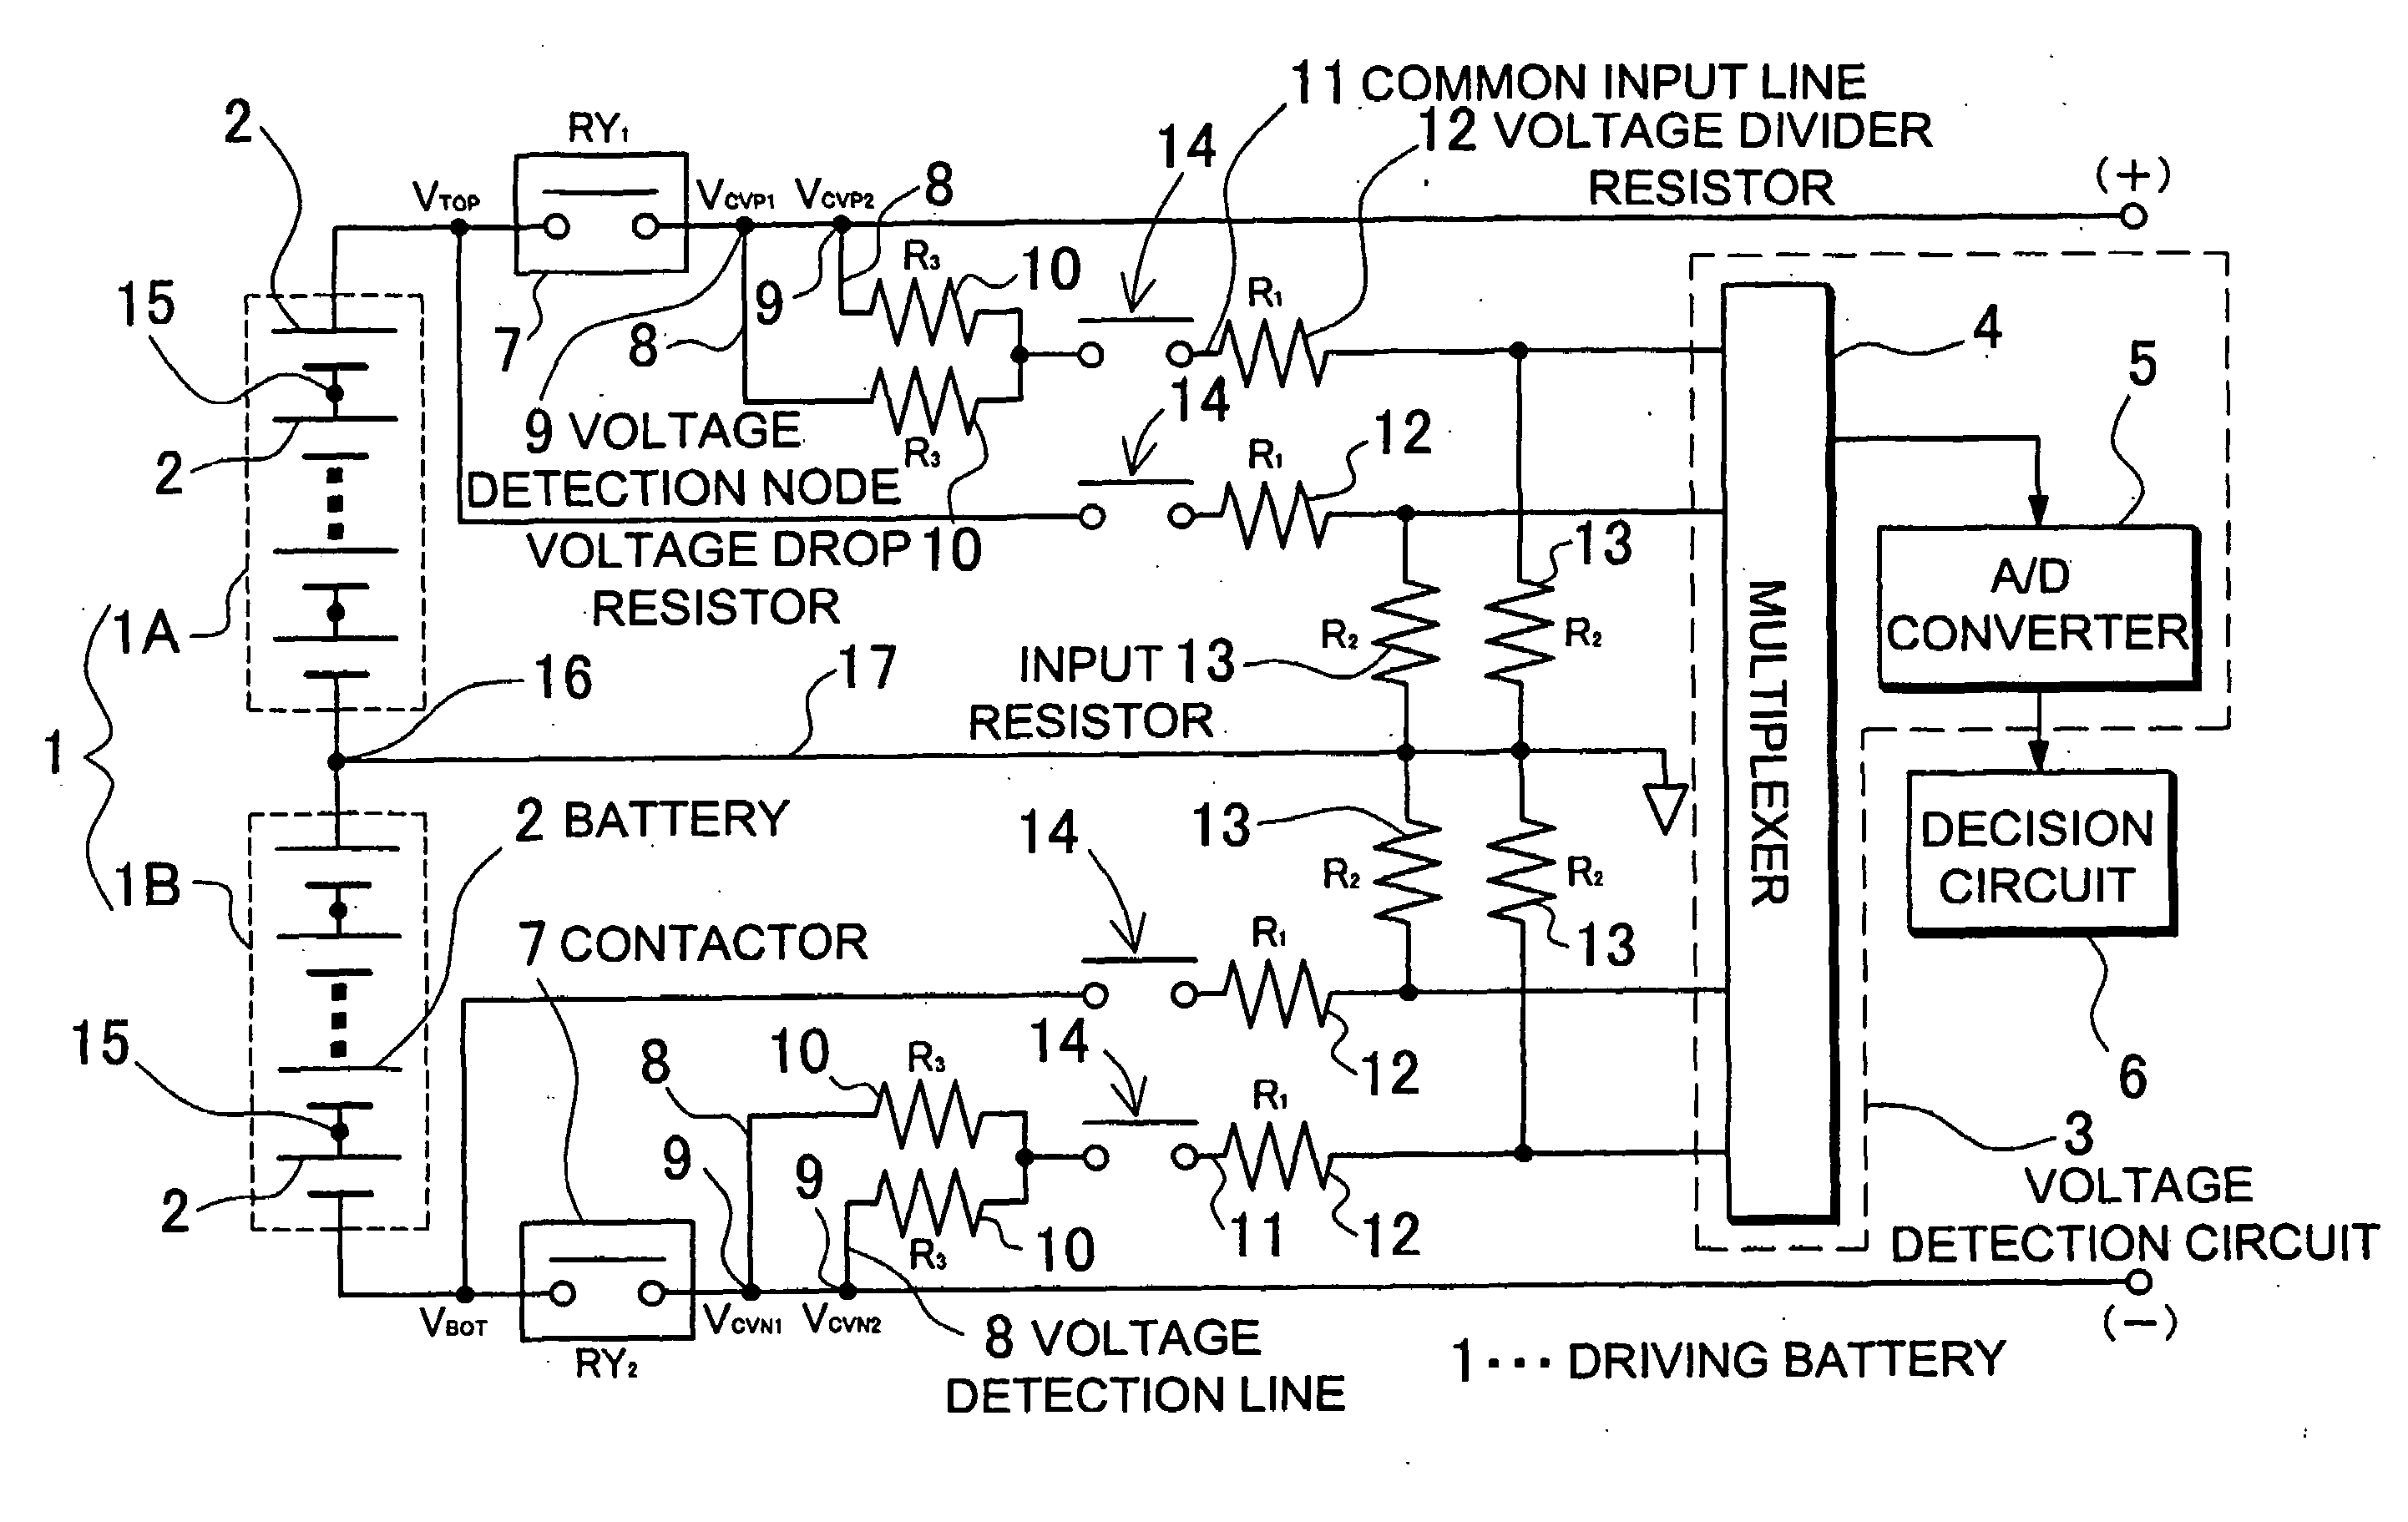 Car power source apparatus